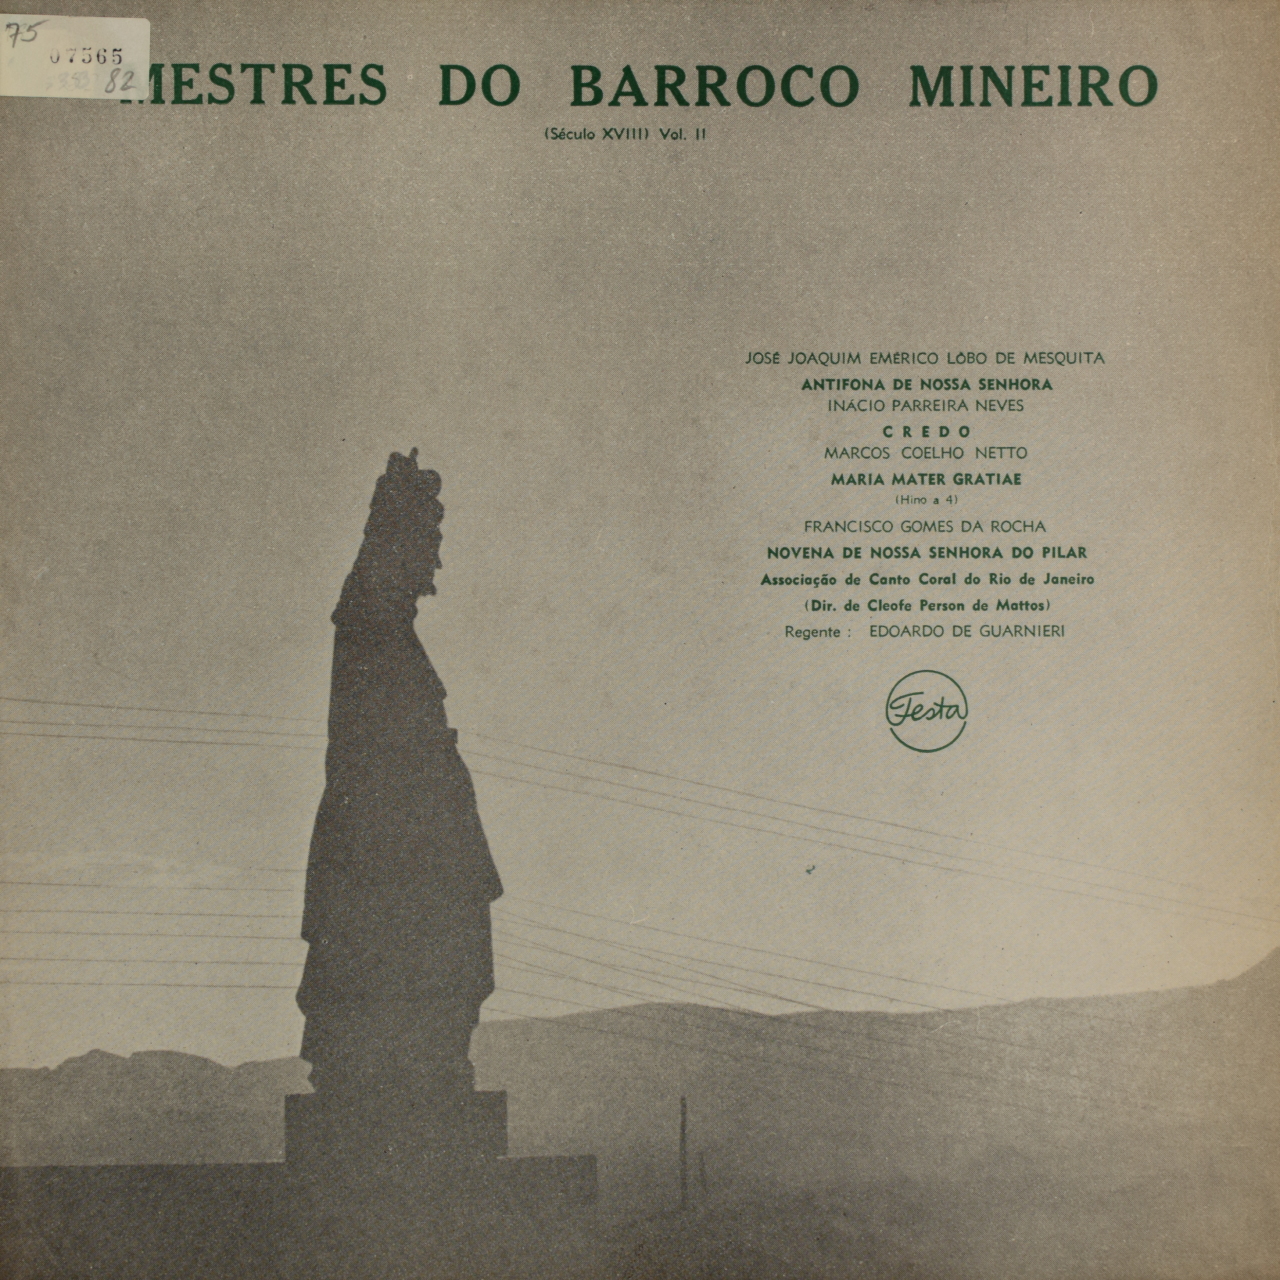 Mestres do Barroco Mineiro (Século VIII) Vol. II